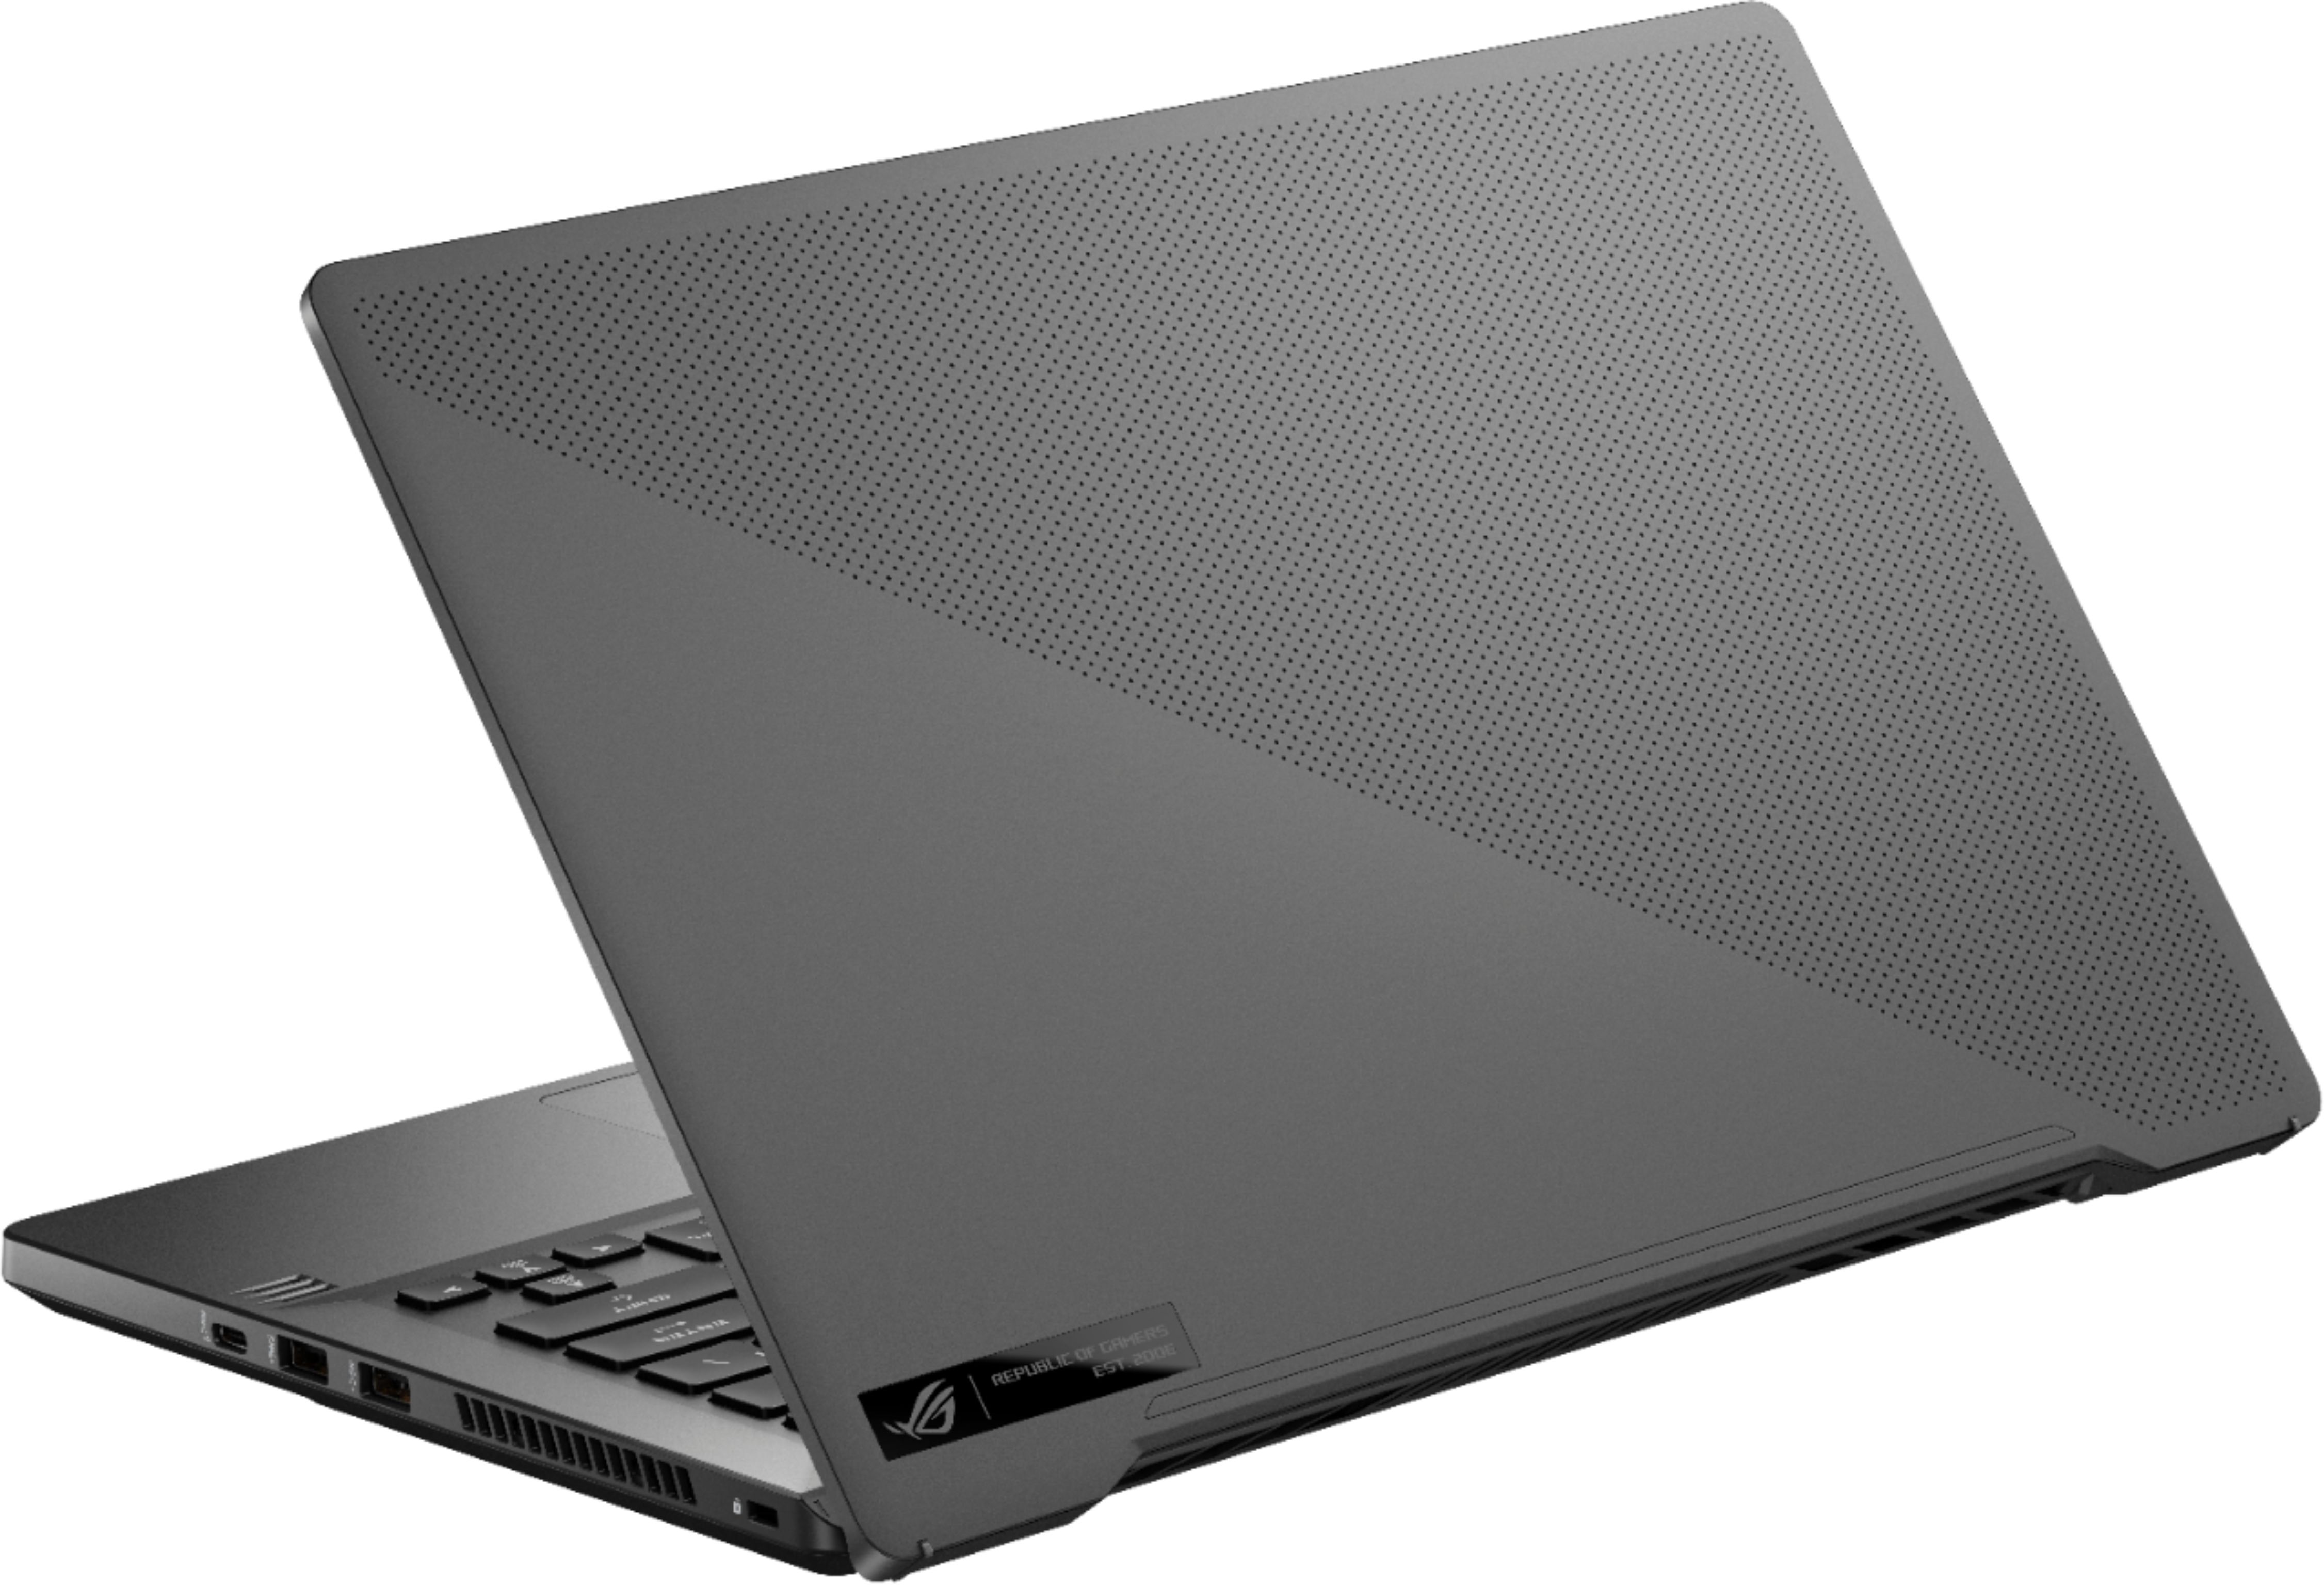 Asus Rog Zephyrus G14 14 Laptop  Amd Ryzen 7  8gb Memory  Nvidia